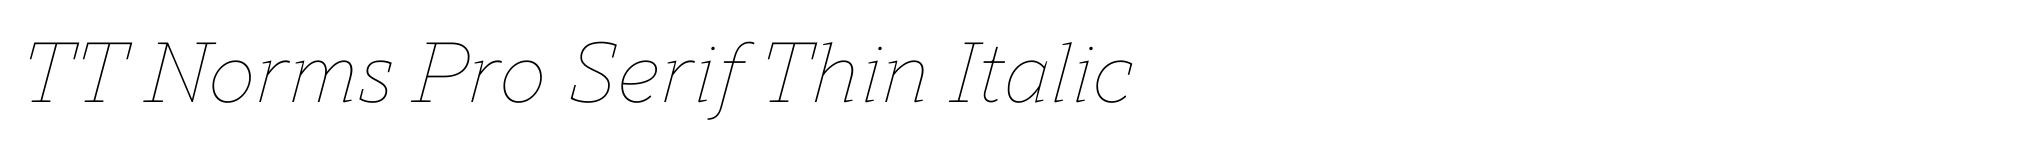 TT Norms Pro Serif Thin Italic image